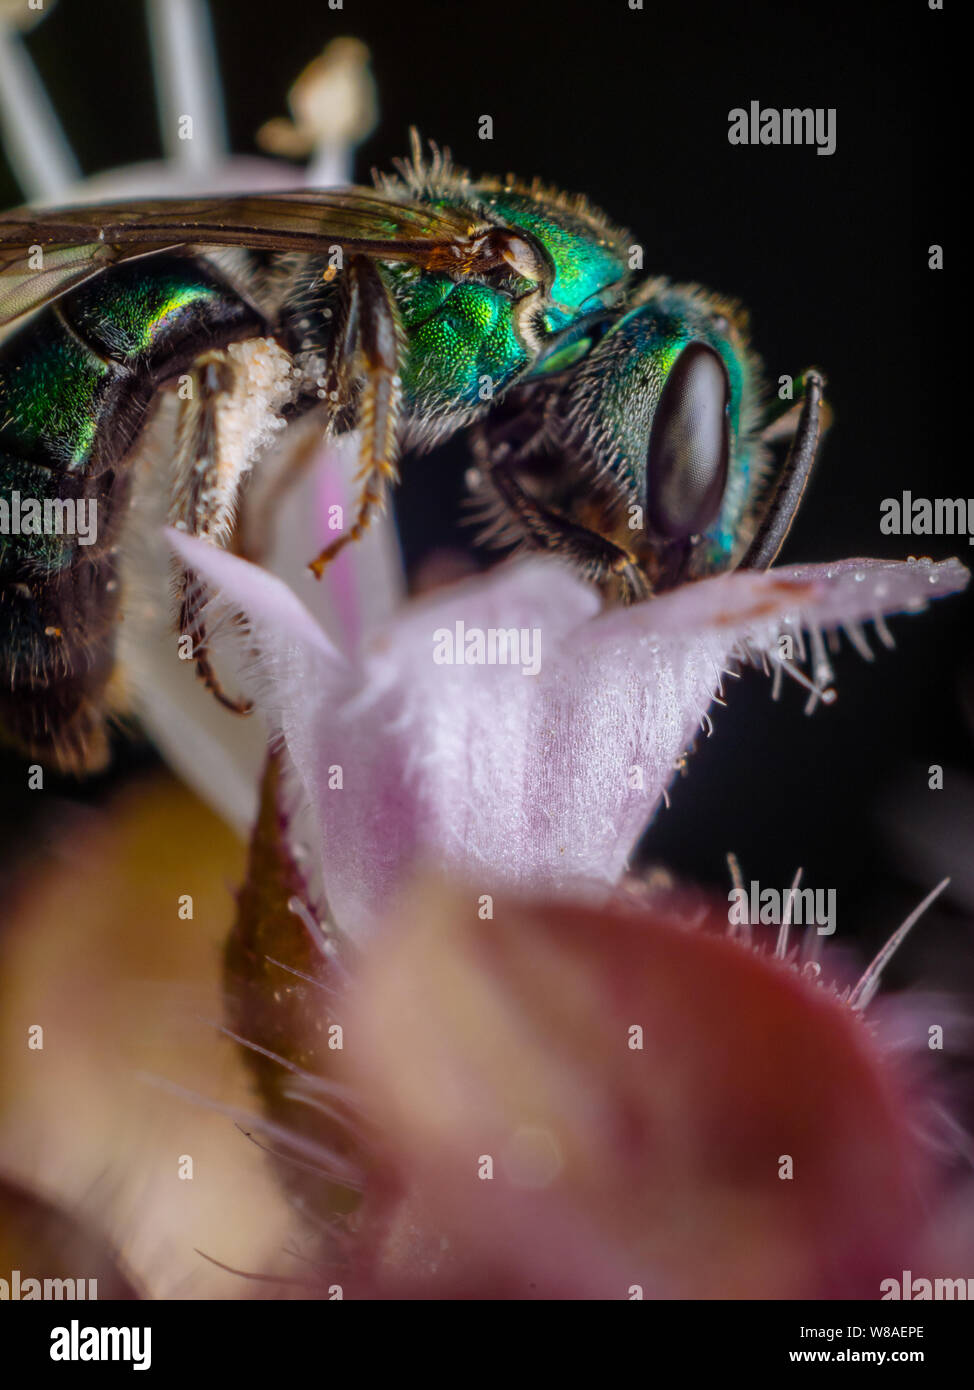 Metallic sweat bee pollinating a flower, wild bee in a tropical garden in Brazil Stock Photo